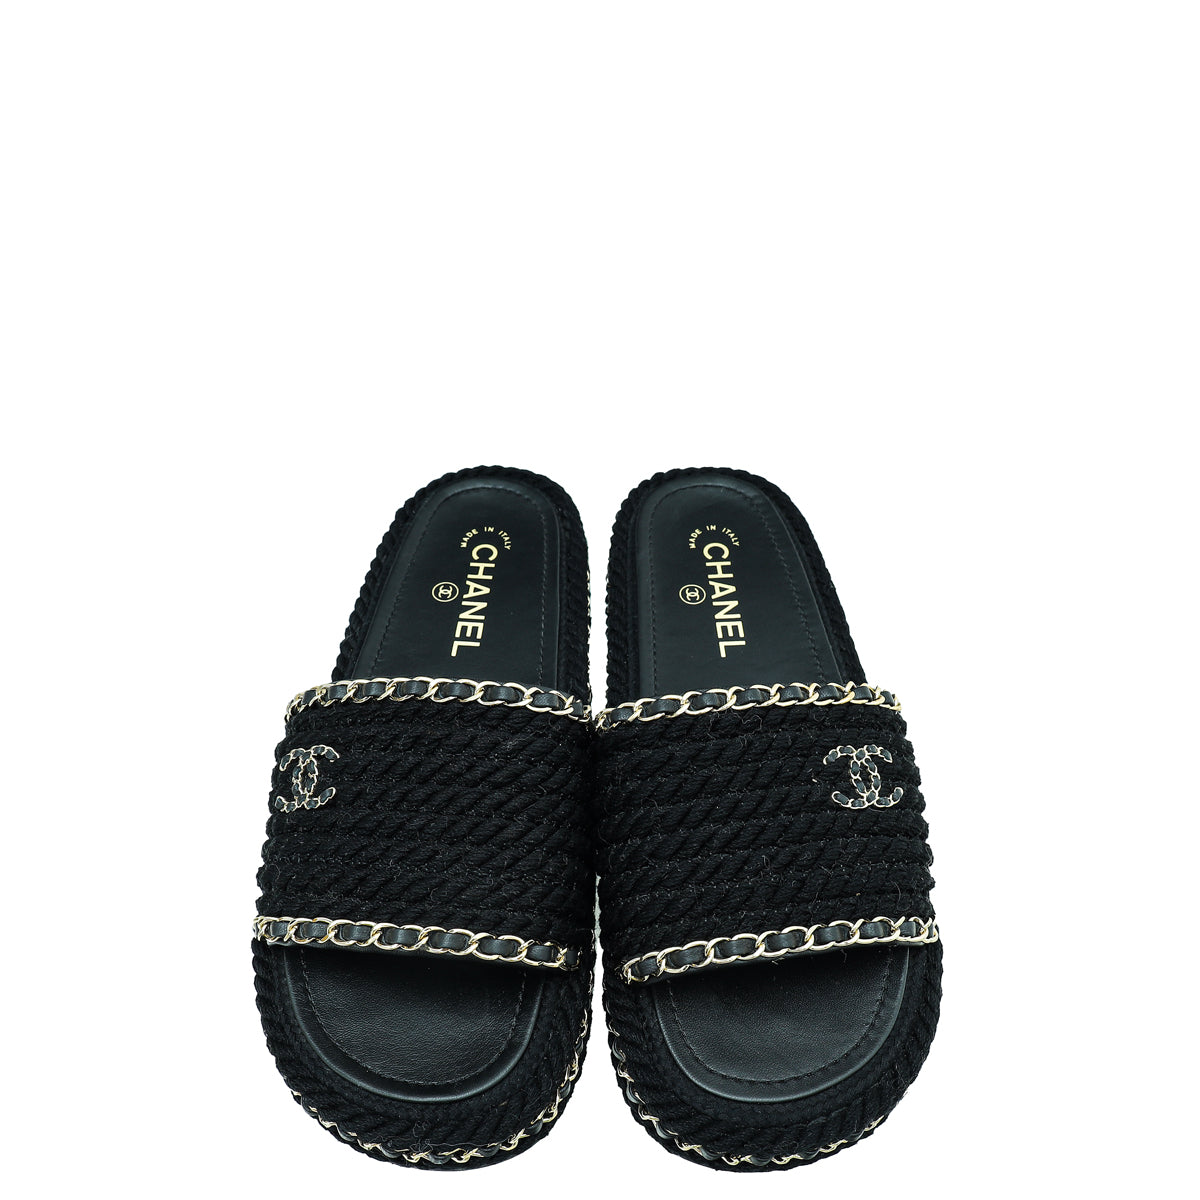 Chanel Black CC Rope Platform Sandals